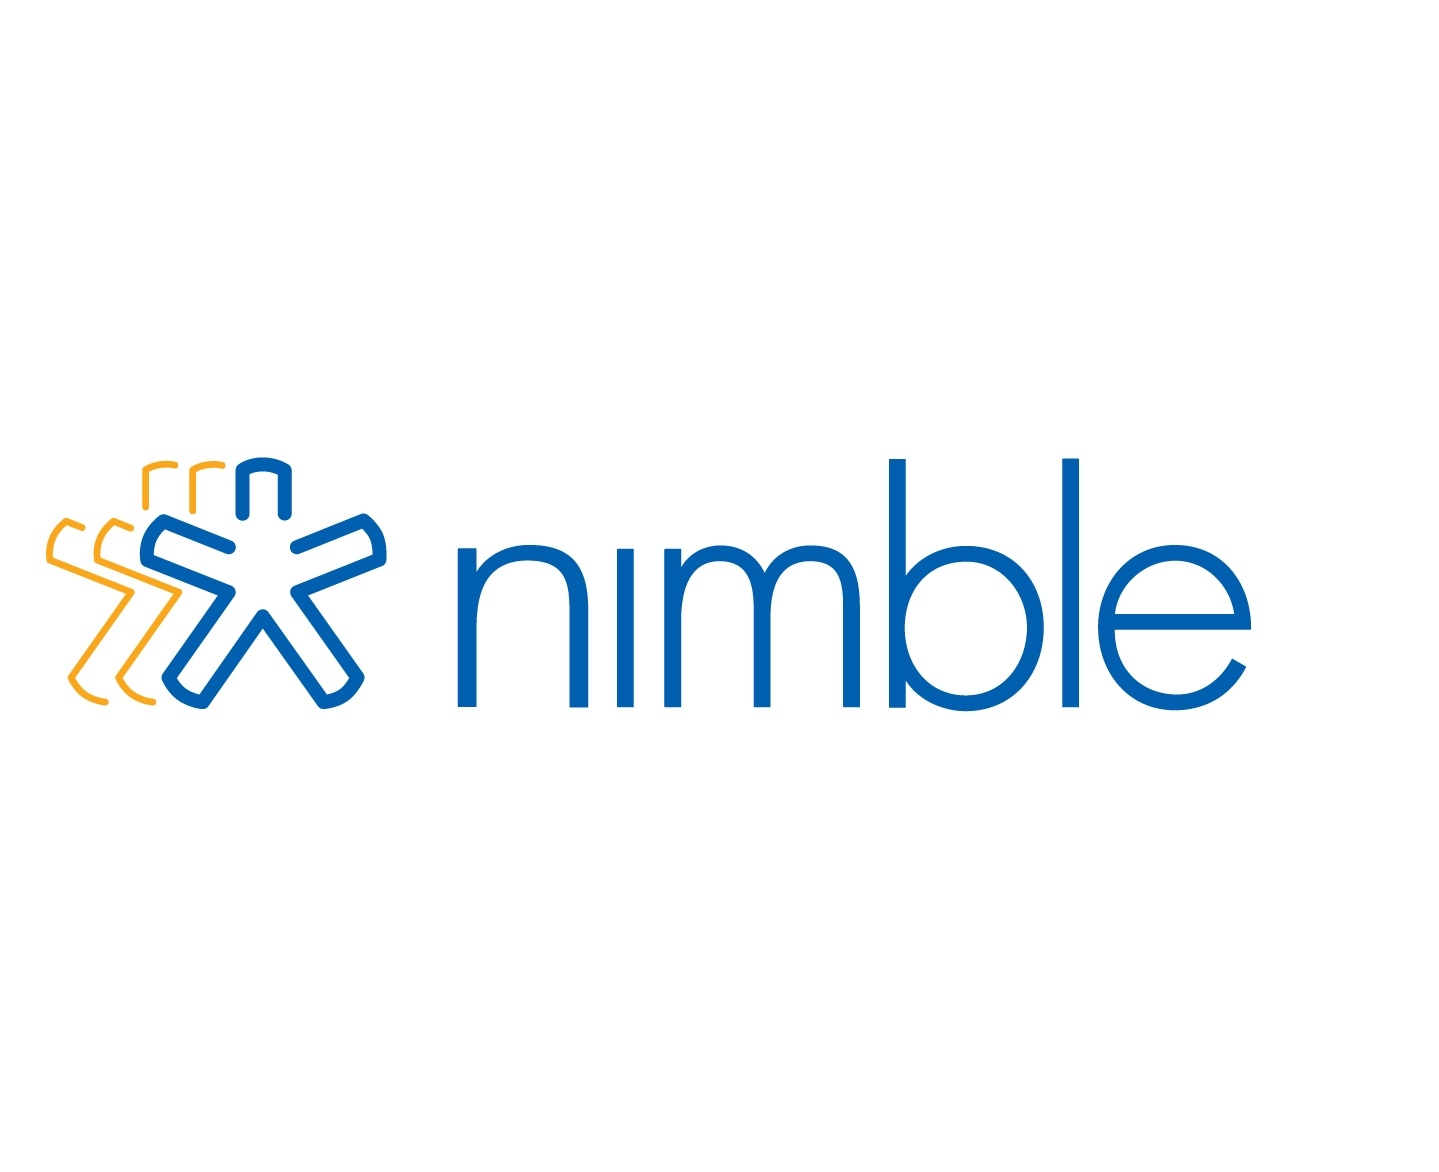  Best Startup CRM Software Logo: Nimble